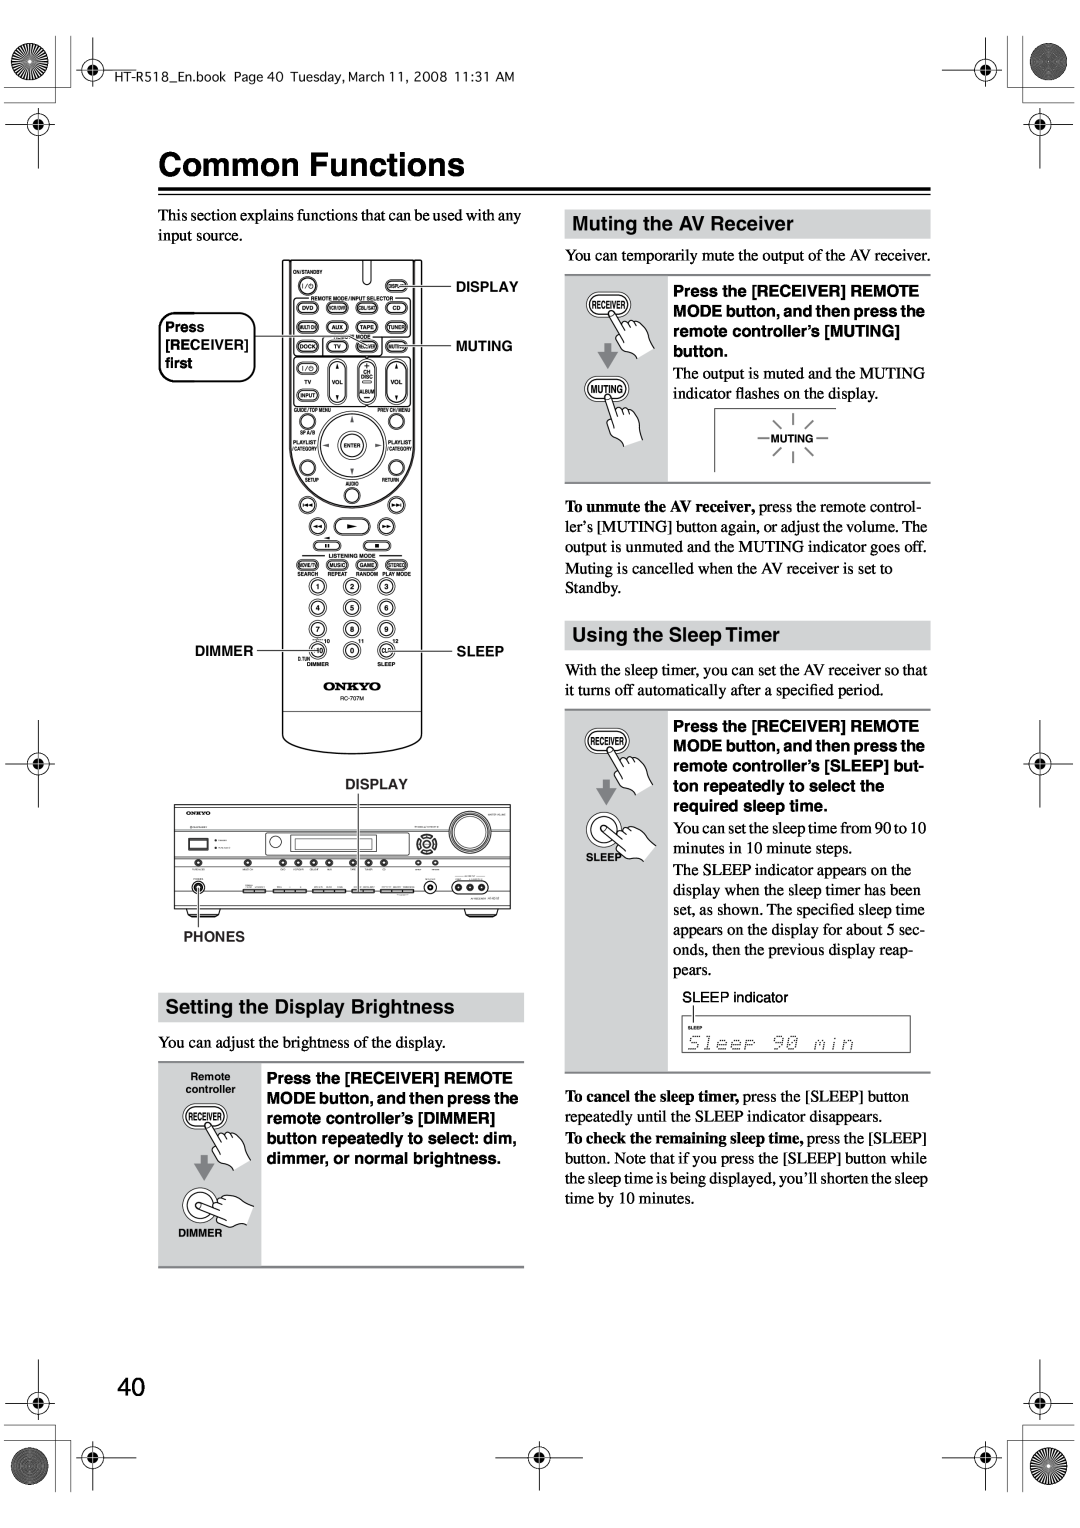 Onkyo HT-R518 Common Functions, Setting the Display Brightness, Muting the AV Receiver, Using the Sleep Timer 